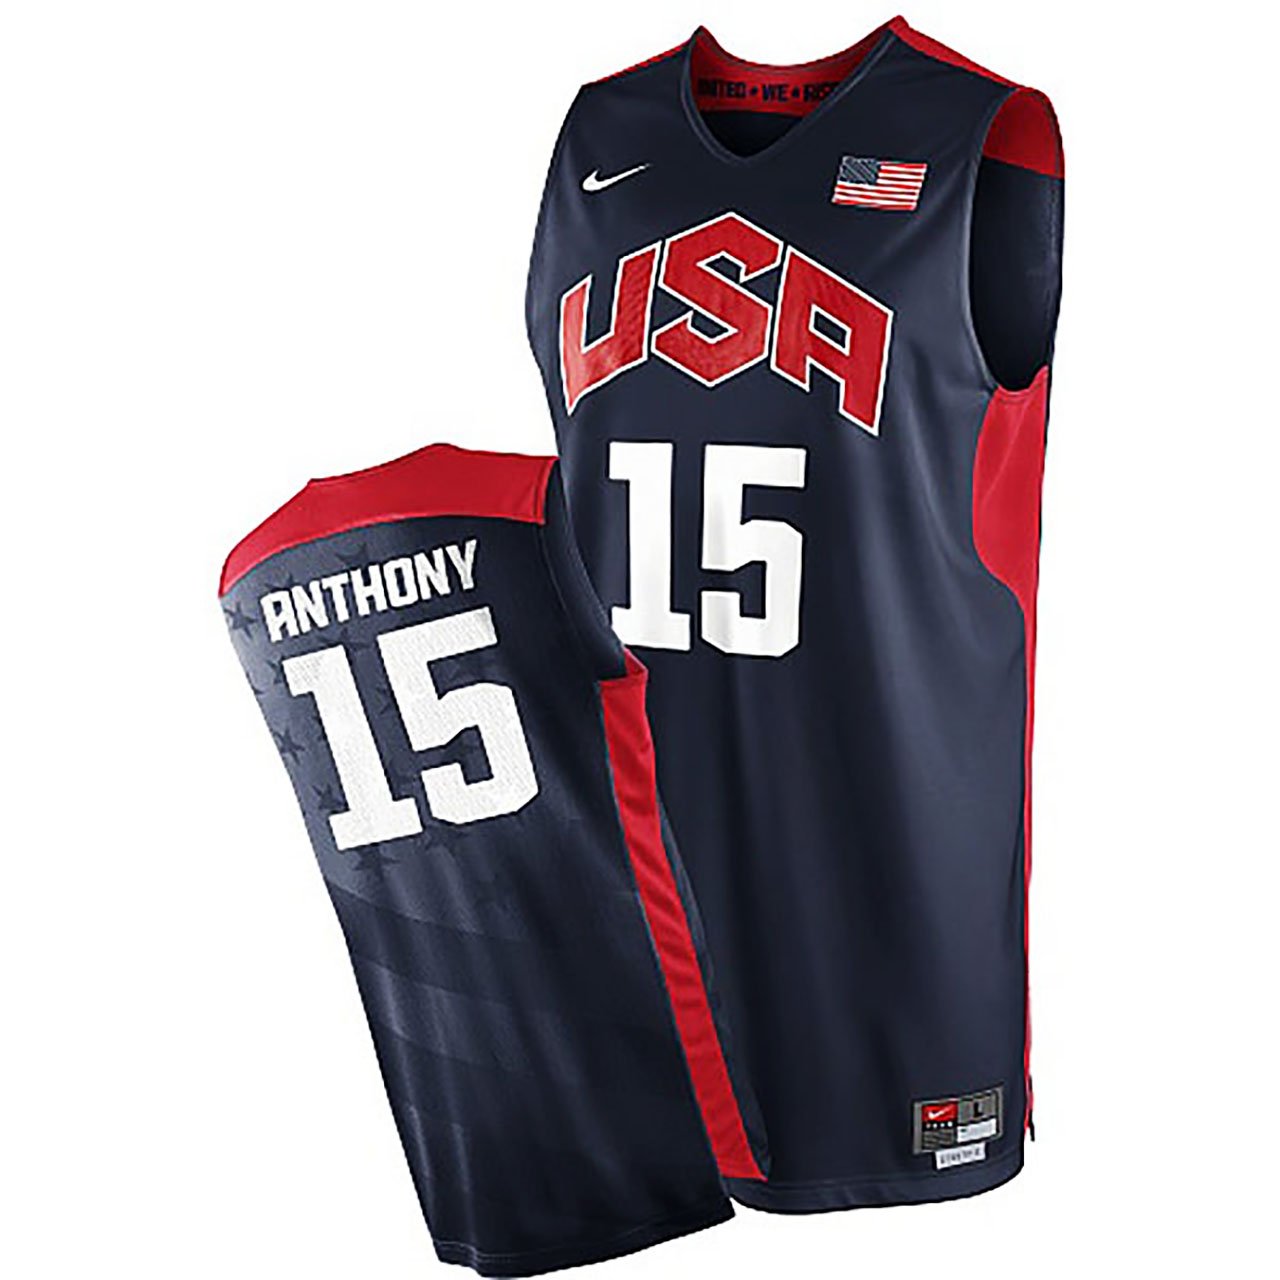 Carmelo Anthony 2012 USA Dream Team 15 Black Stitched Jersey